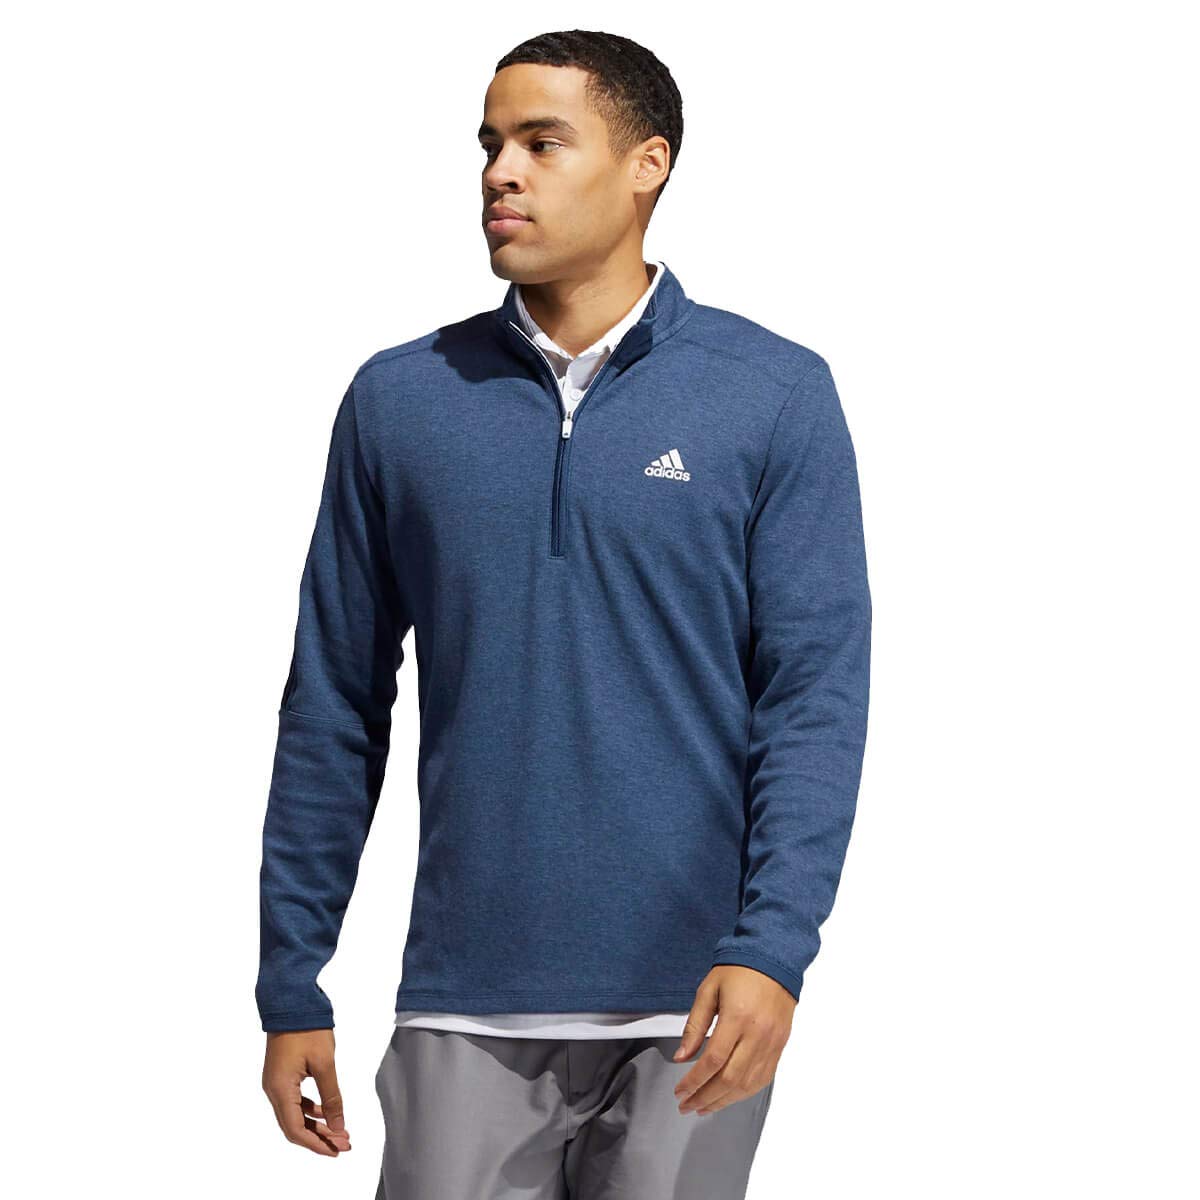 adidas Golf Herren DREI Streifen 1/4 Zip Sweater Sweatshirt Blau